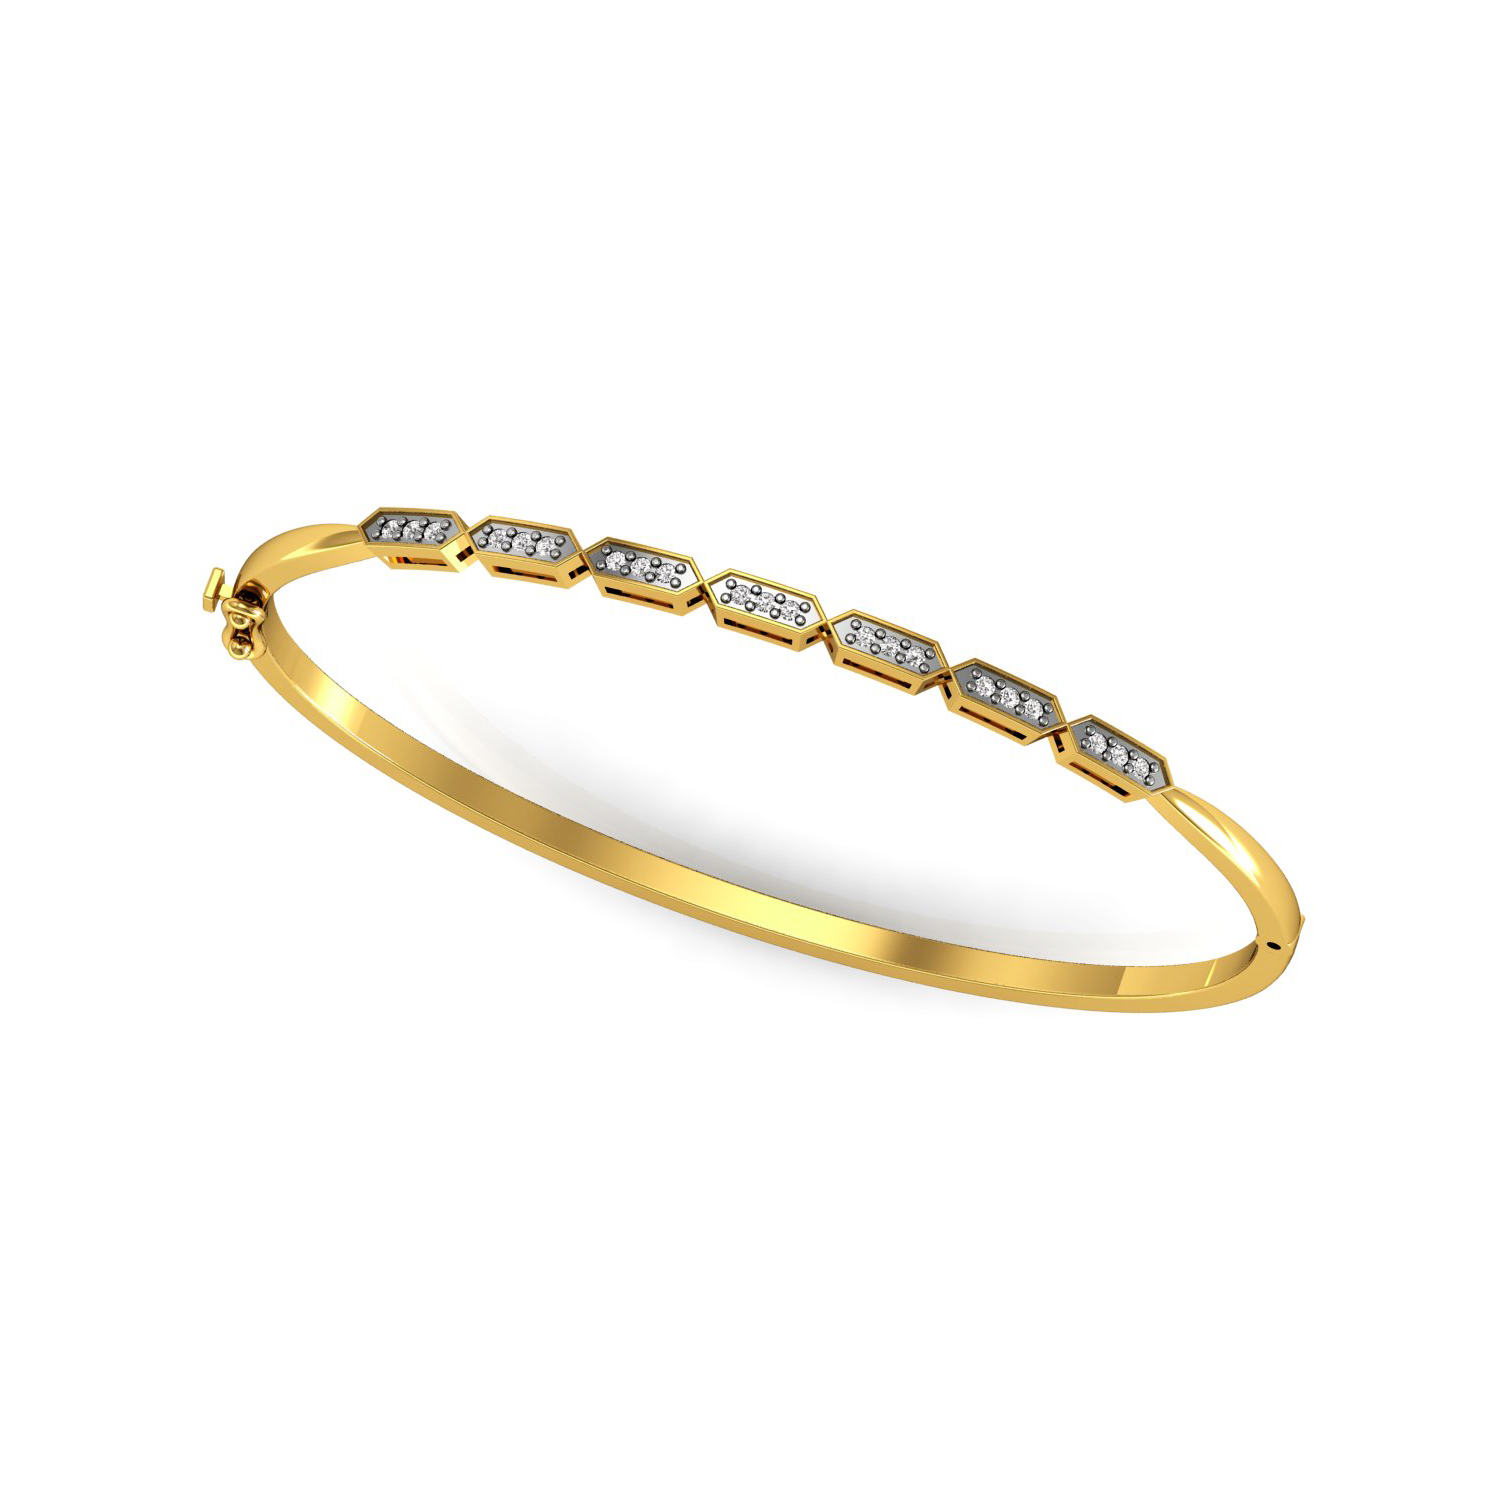 Genuine diamond openable gold sleek bangle bracelet